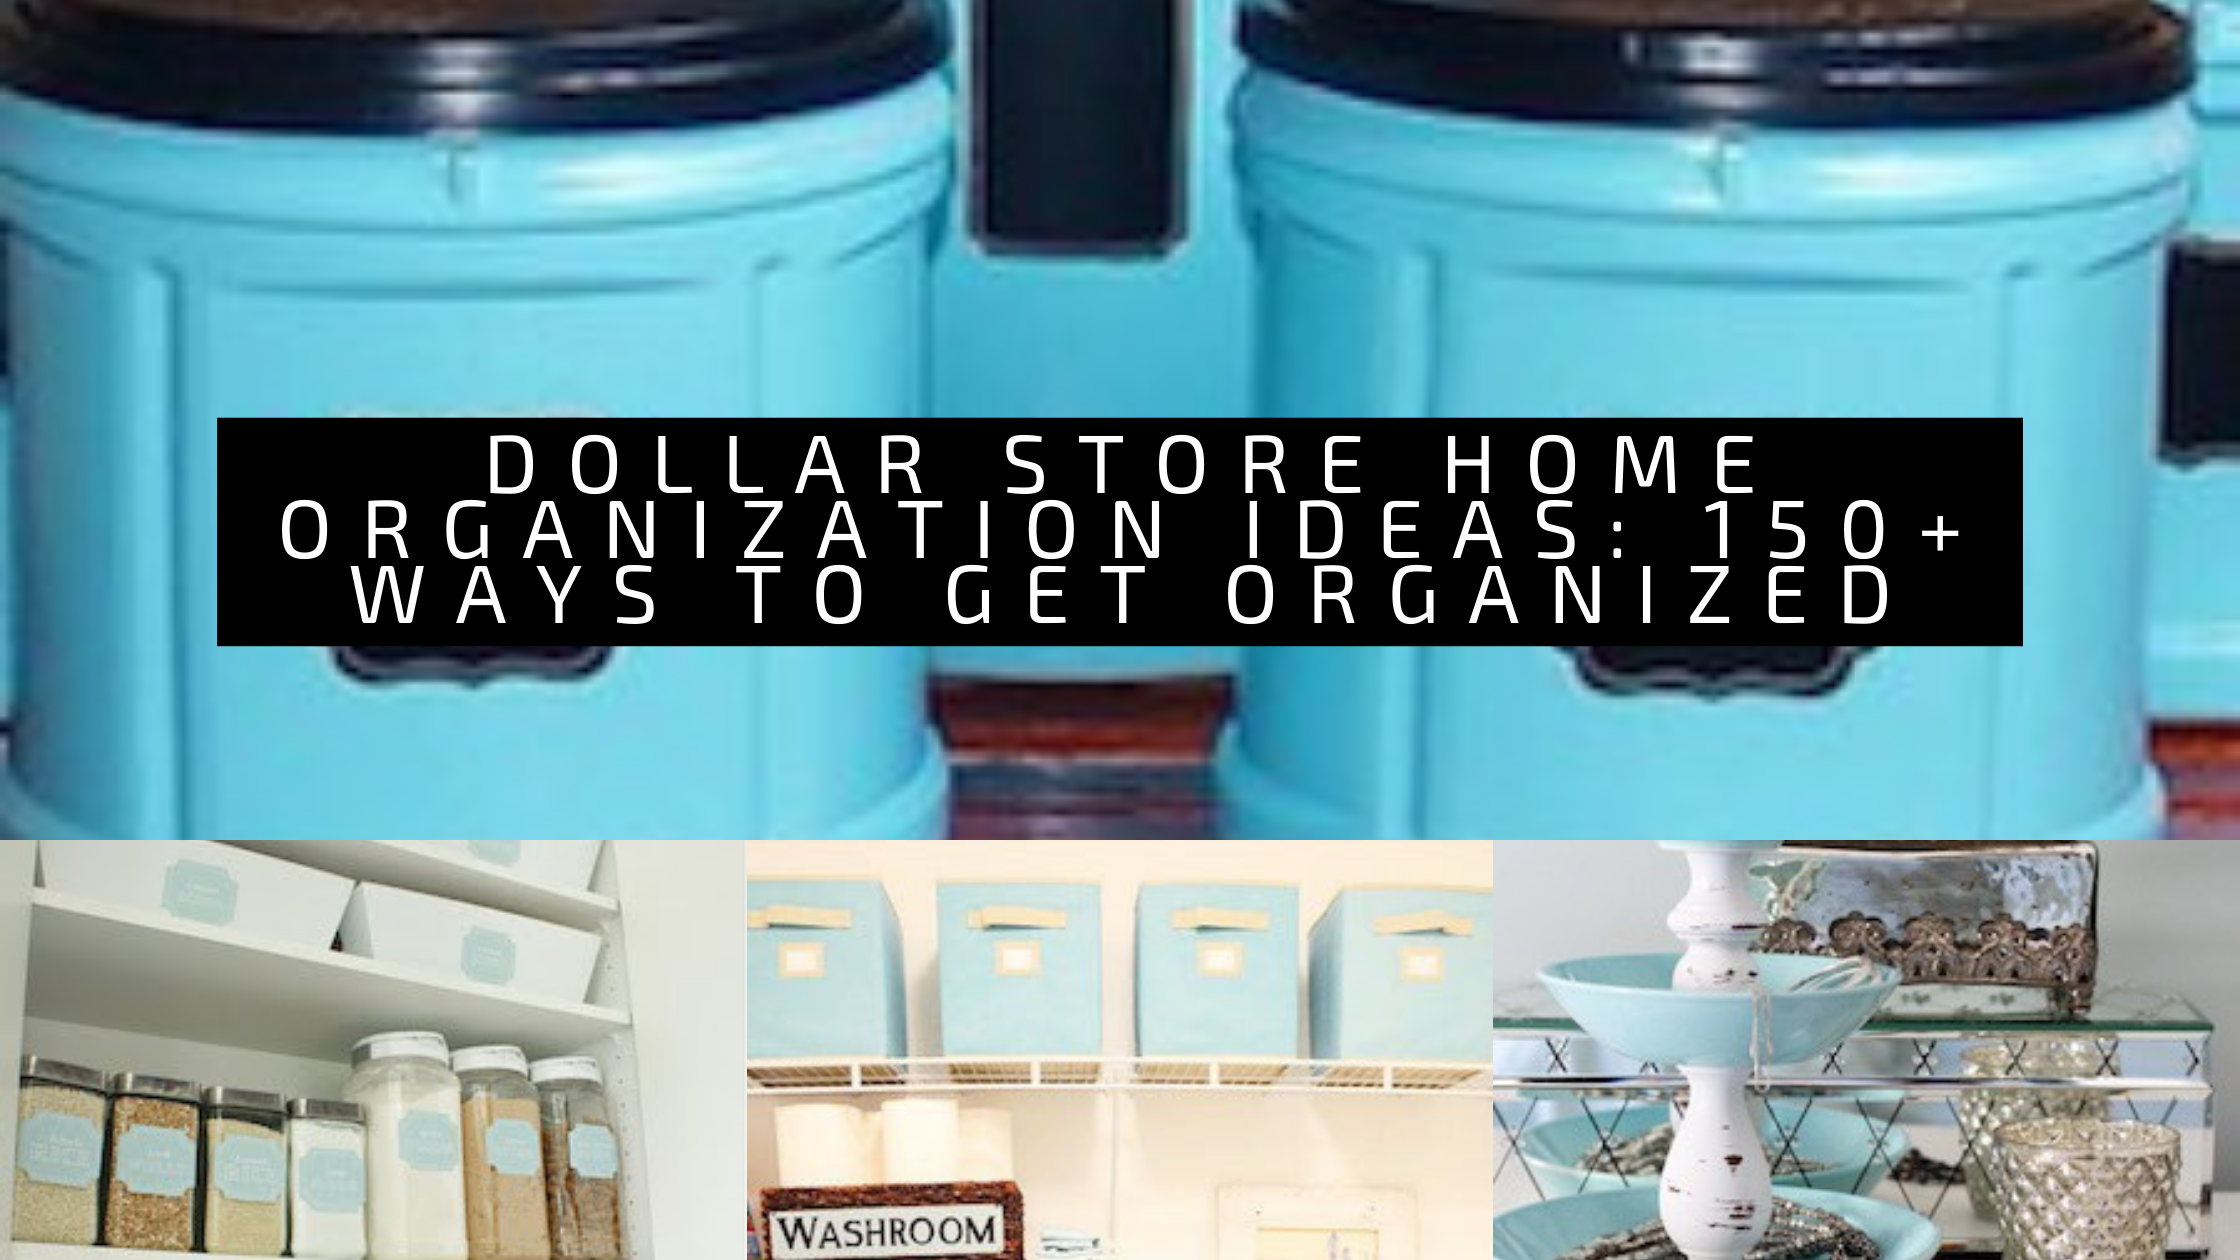 Dollar Store Home Organization Ideas: 150+ Ways to Get Organized 17